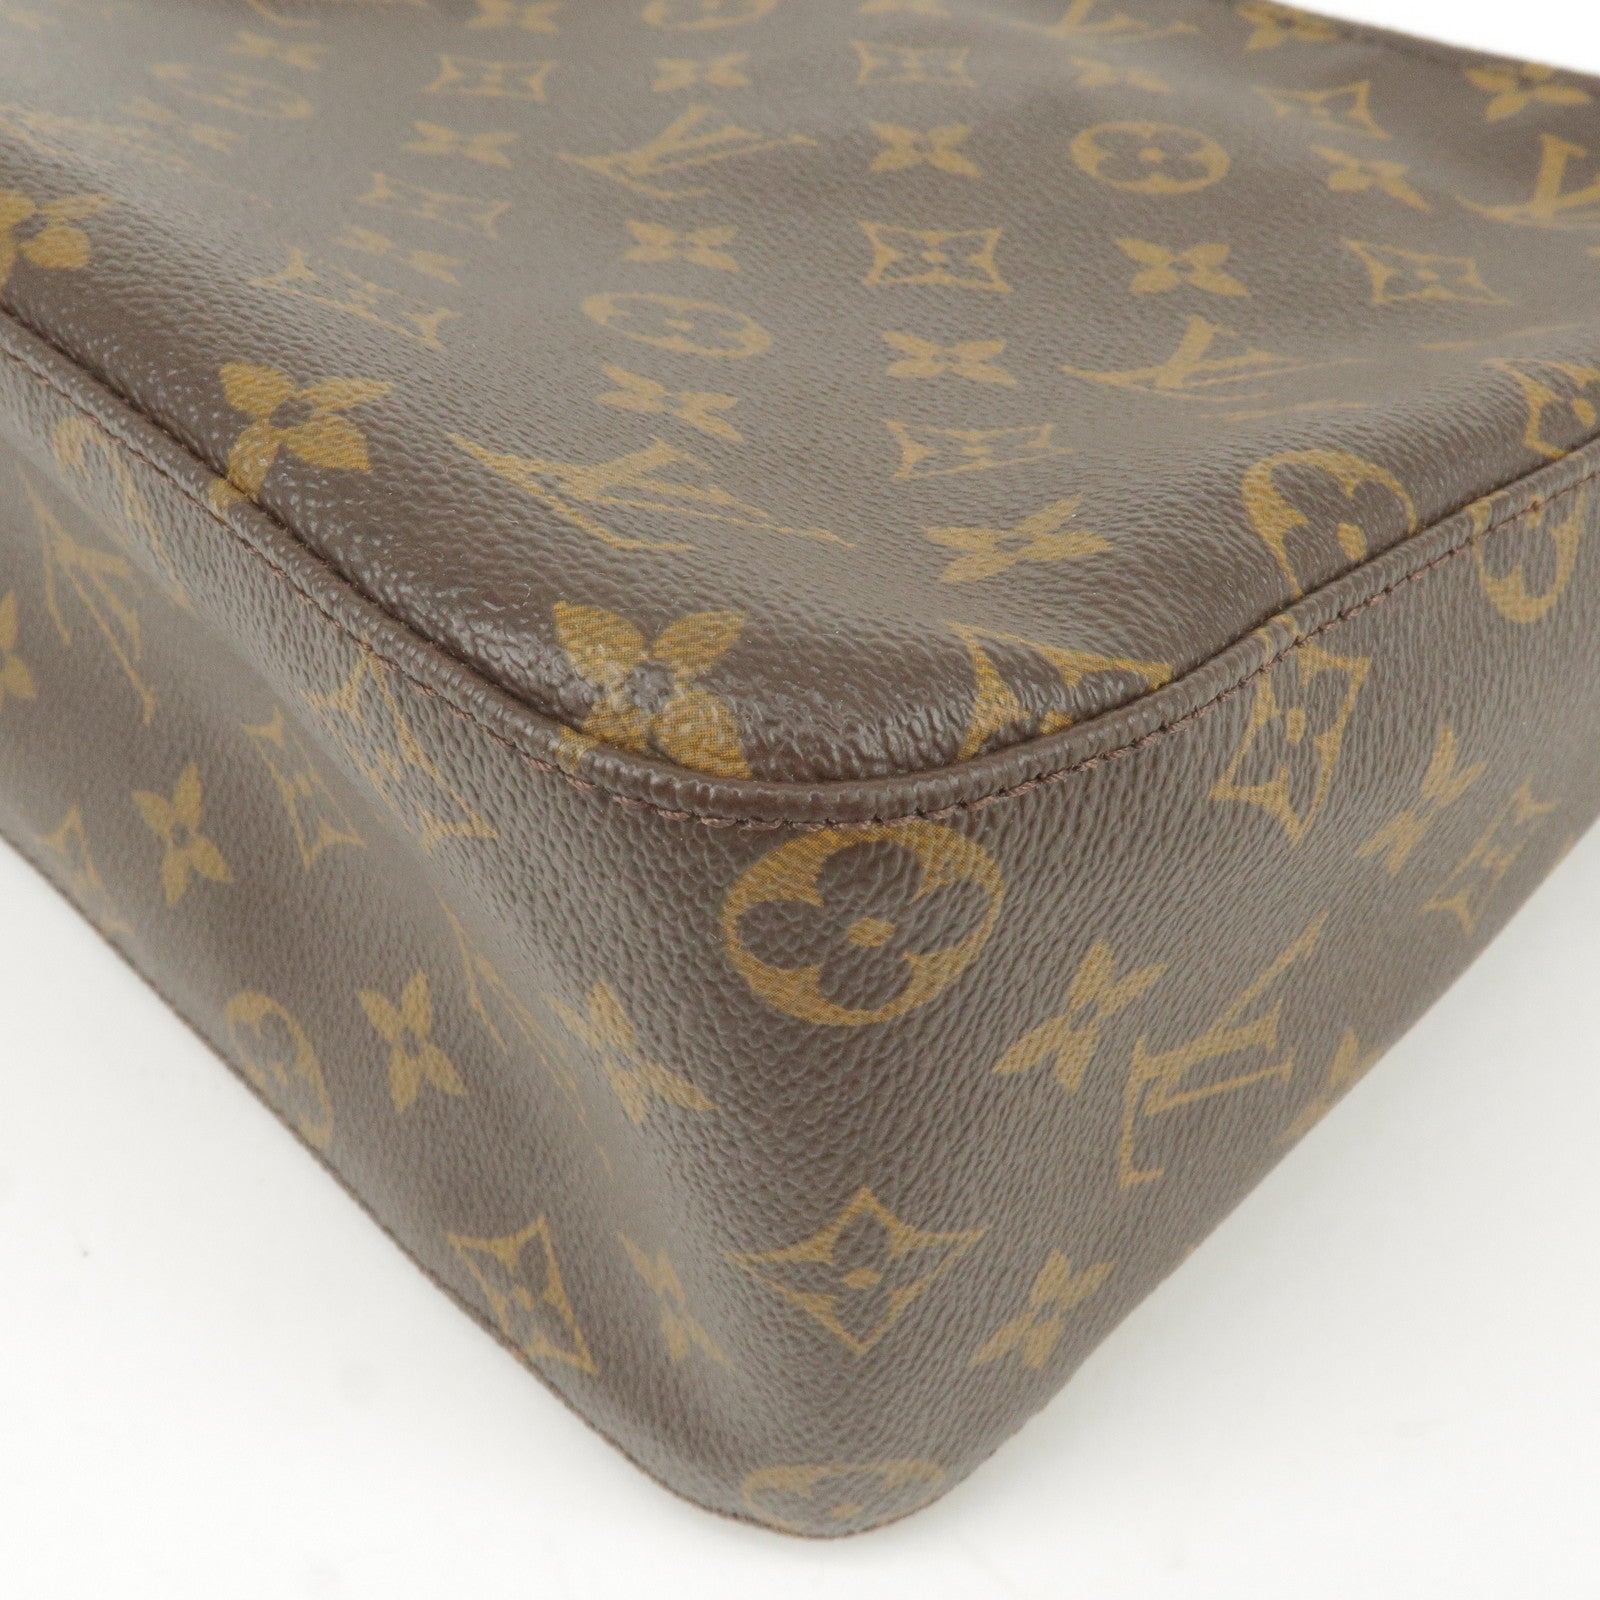 Louis Vuitton Ebene Monogram Loop Bag